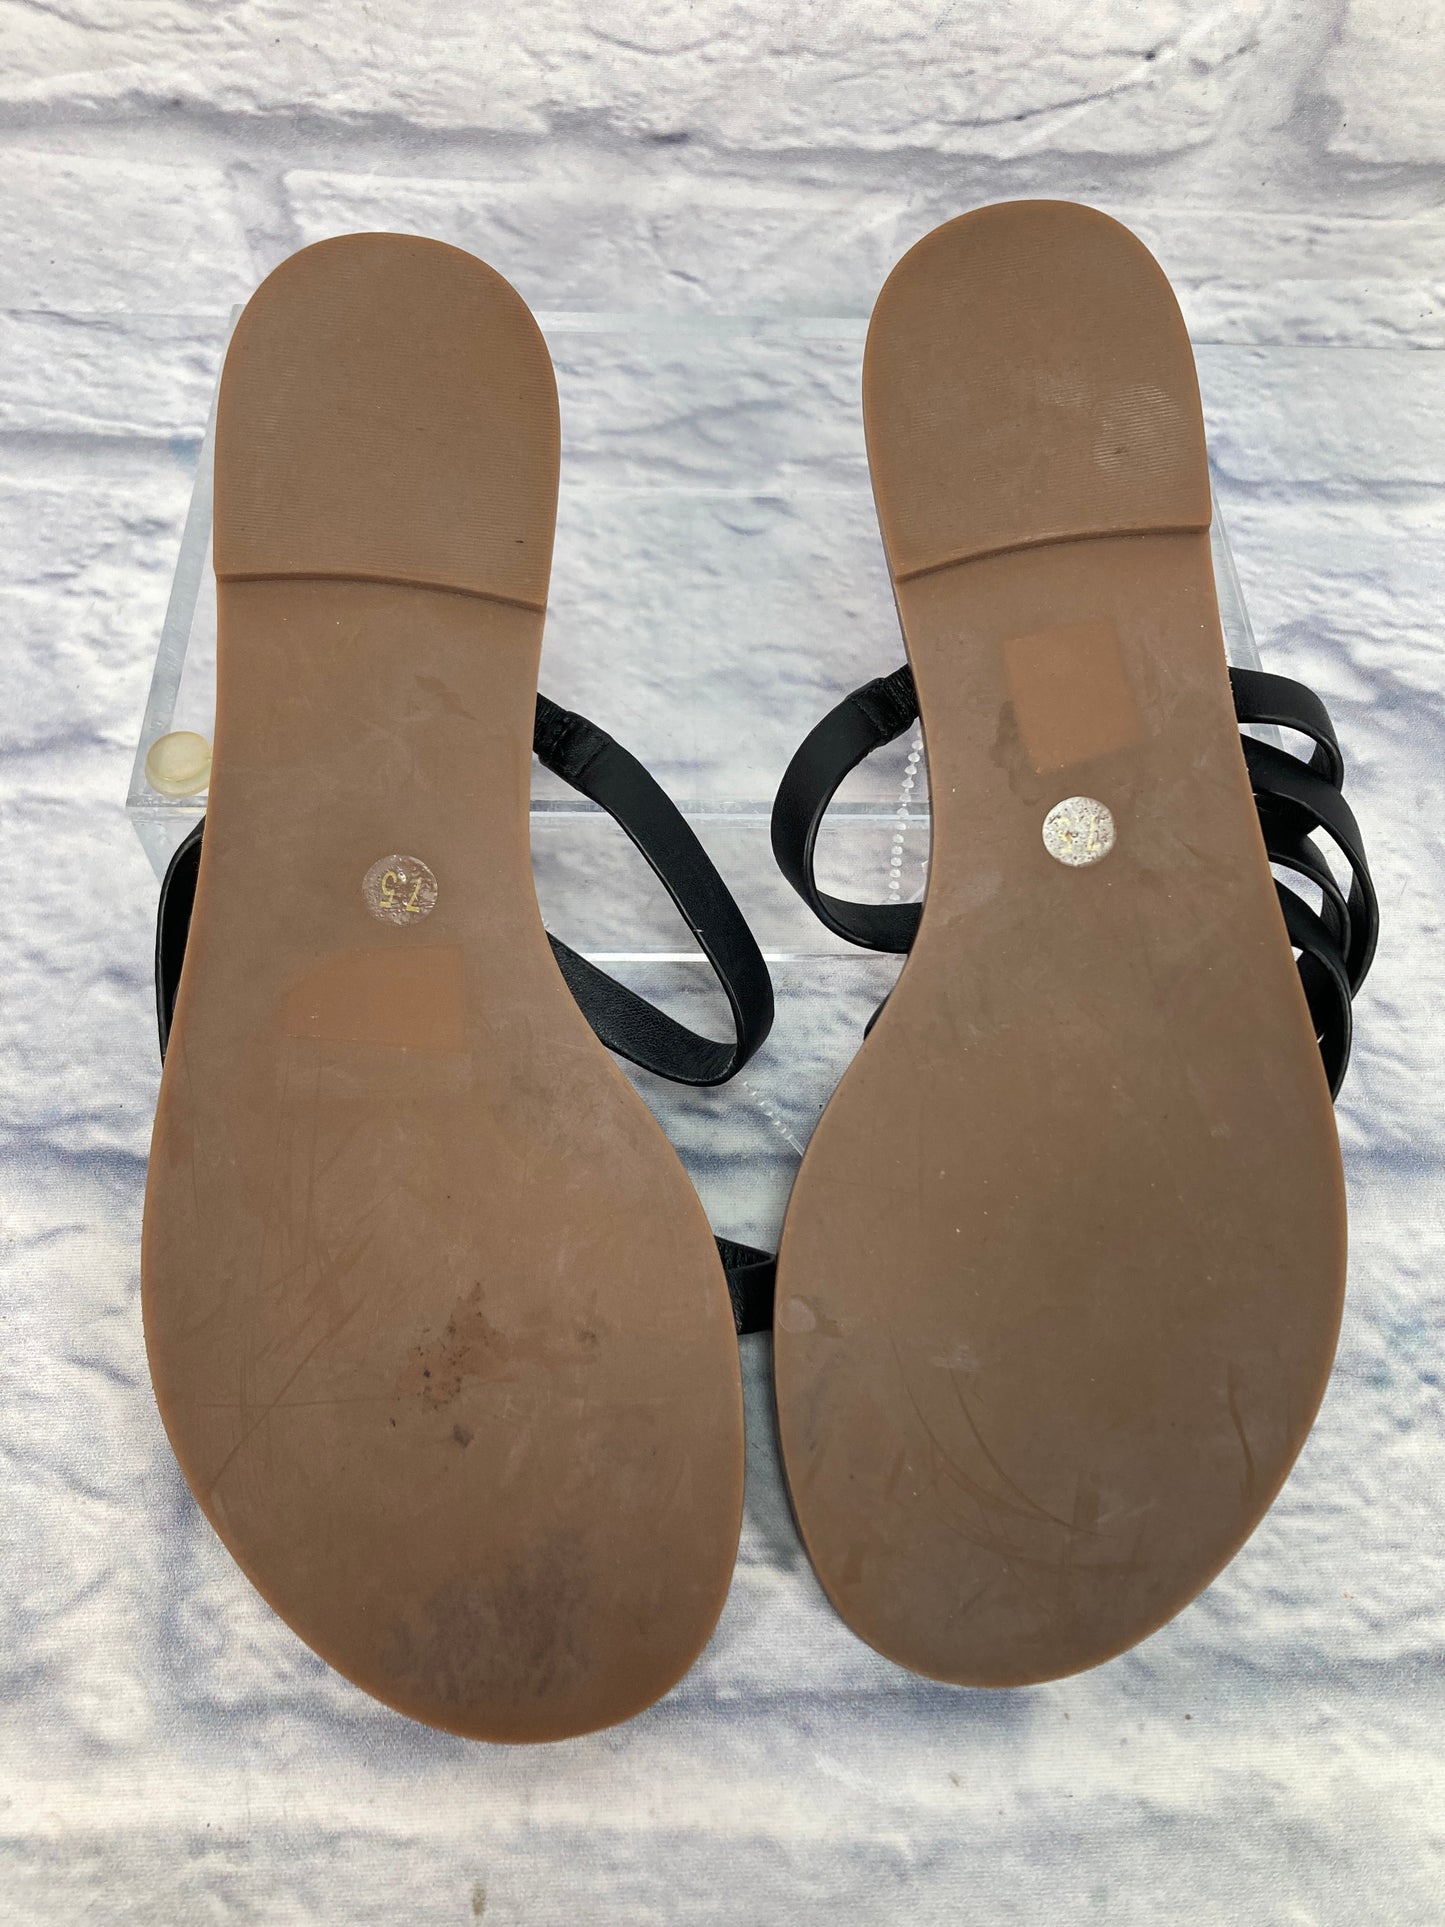 Black Sandals Flats Tory Burch, Size 7